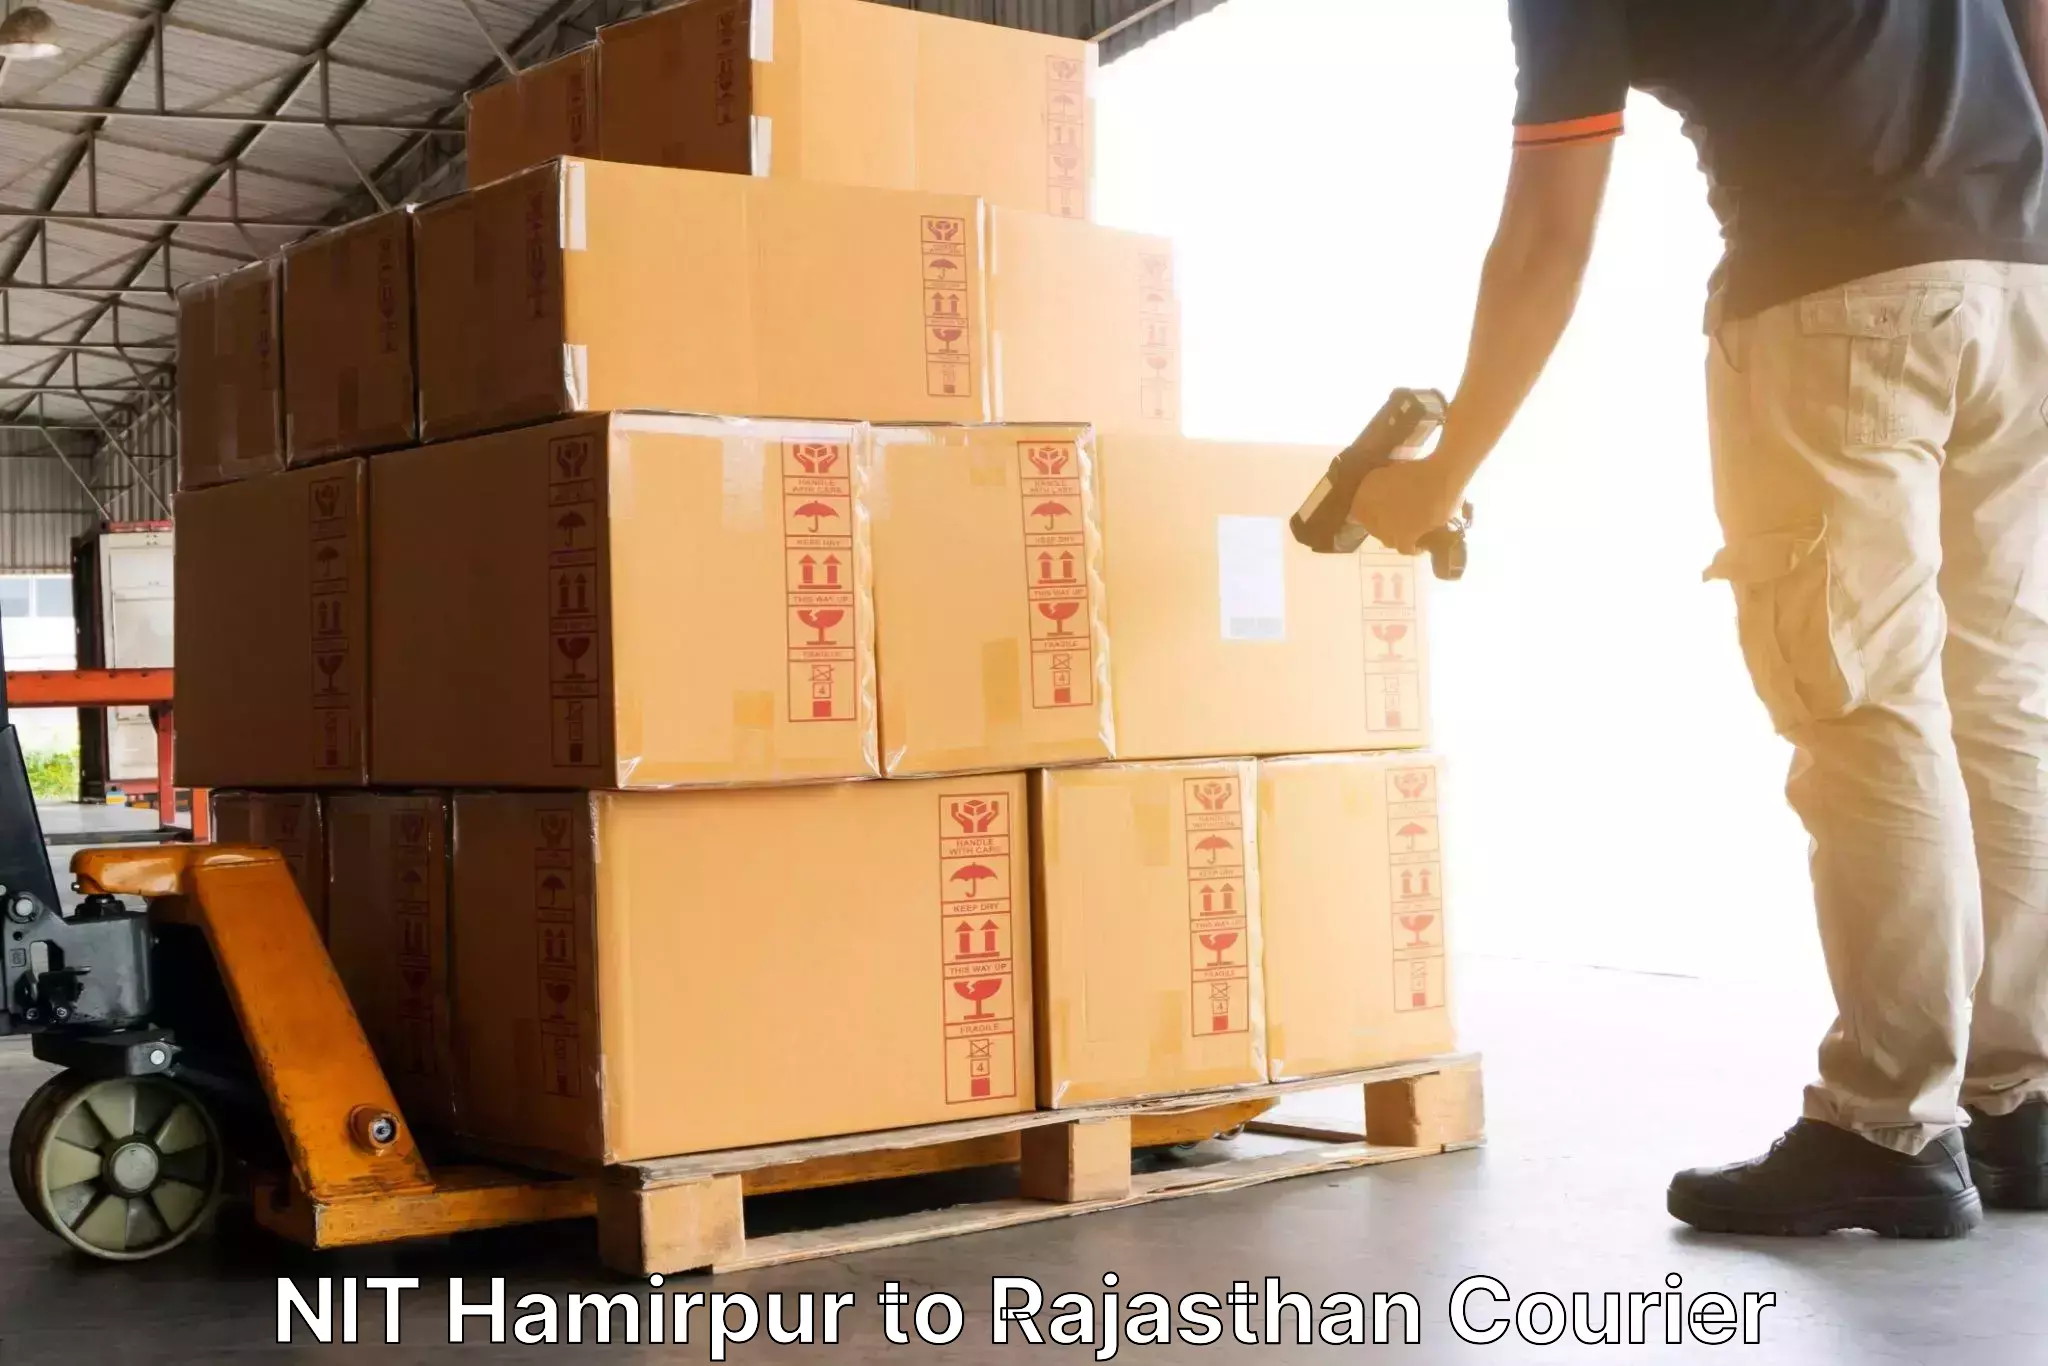 24-hour courier service NIT Hamirpur to Bikaner